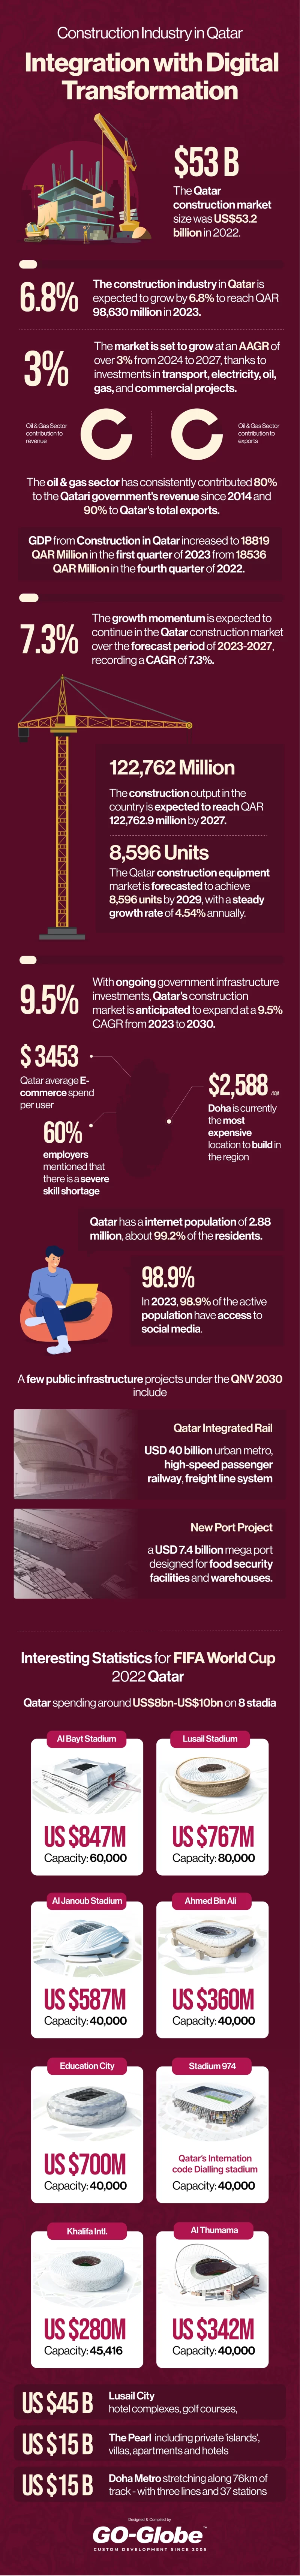 Construction Industry in Qatar - Integration with Digital Transformation